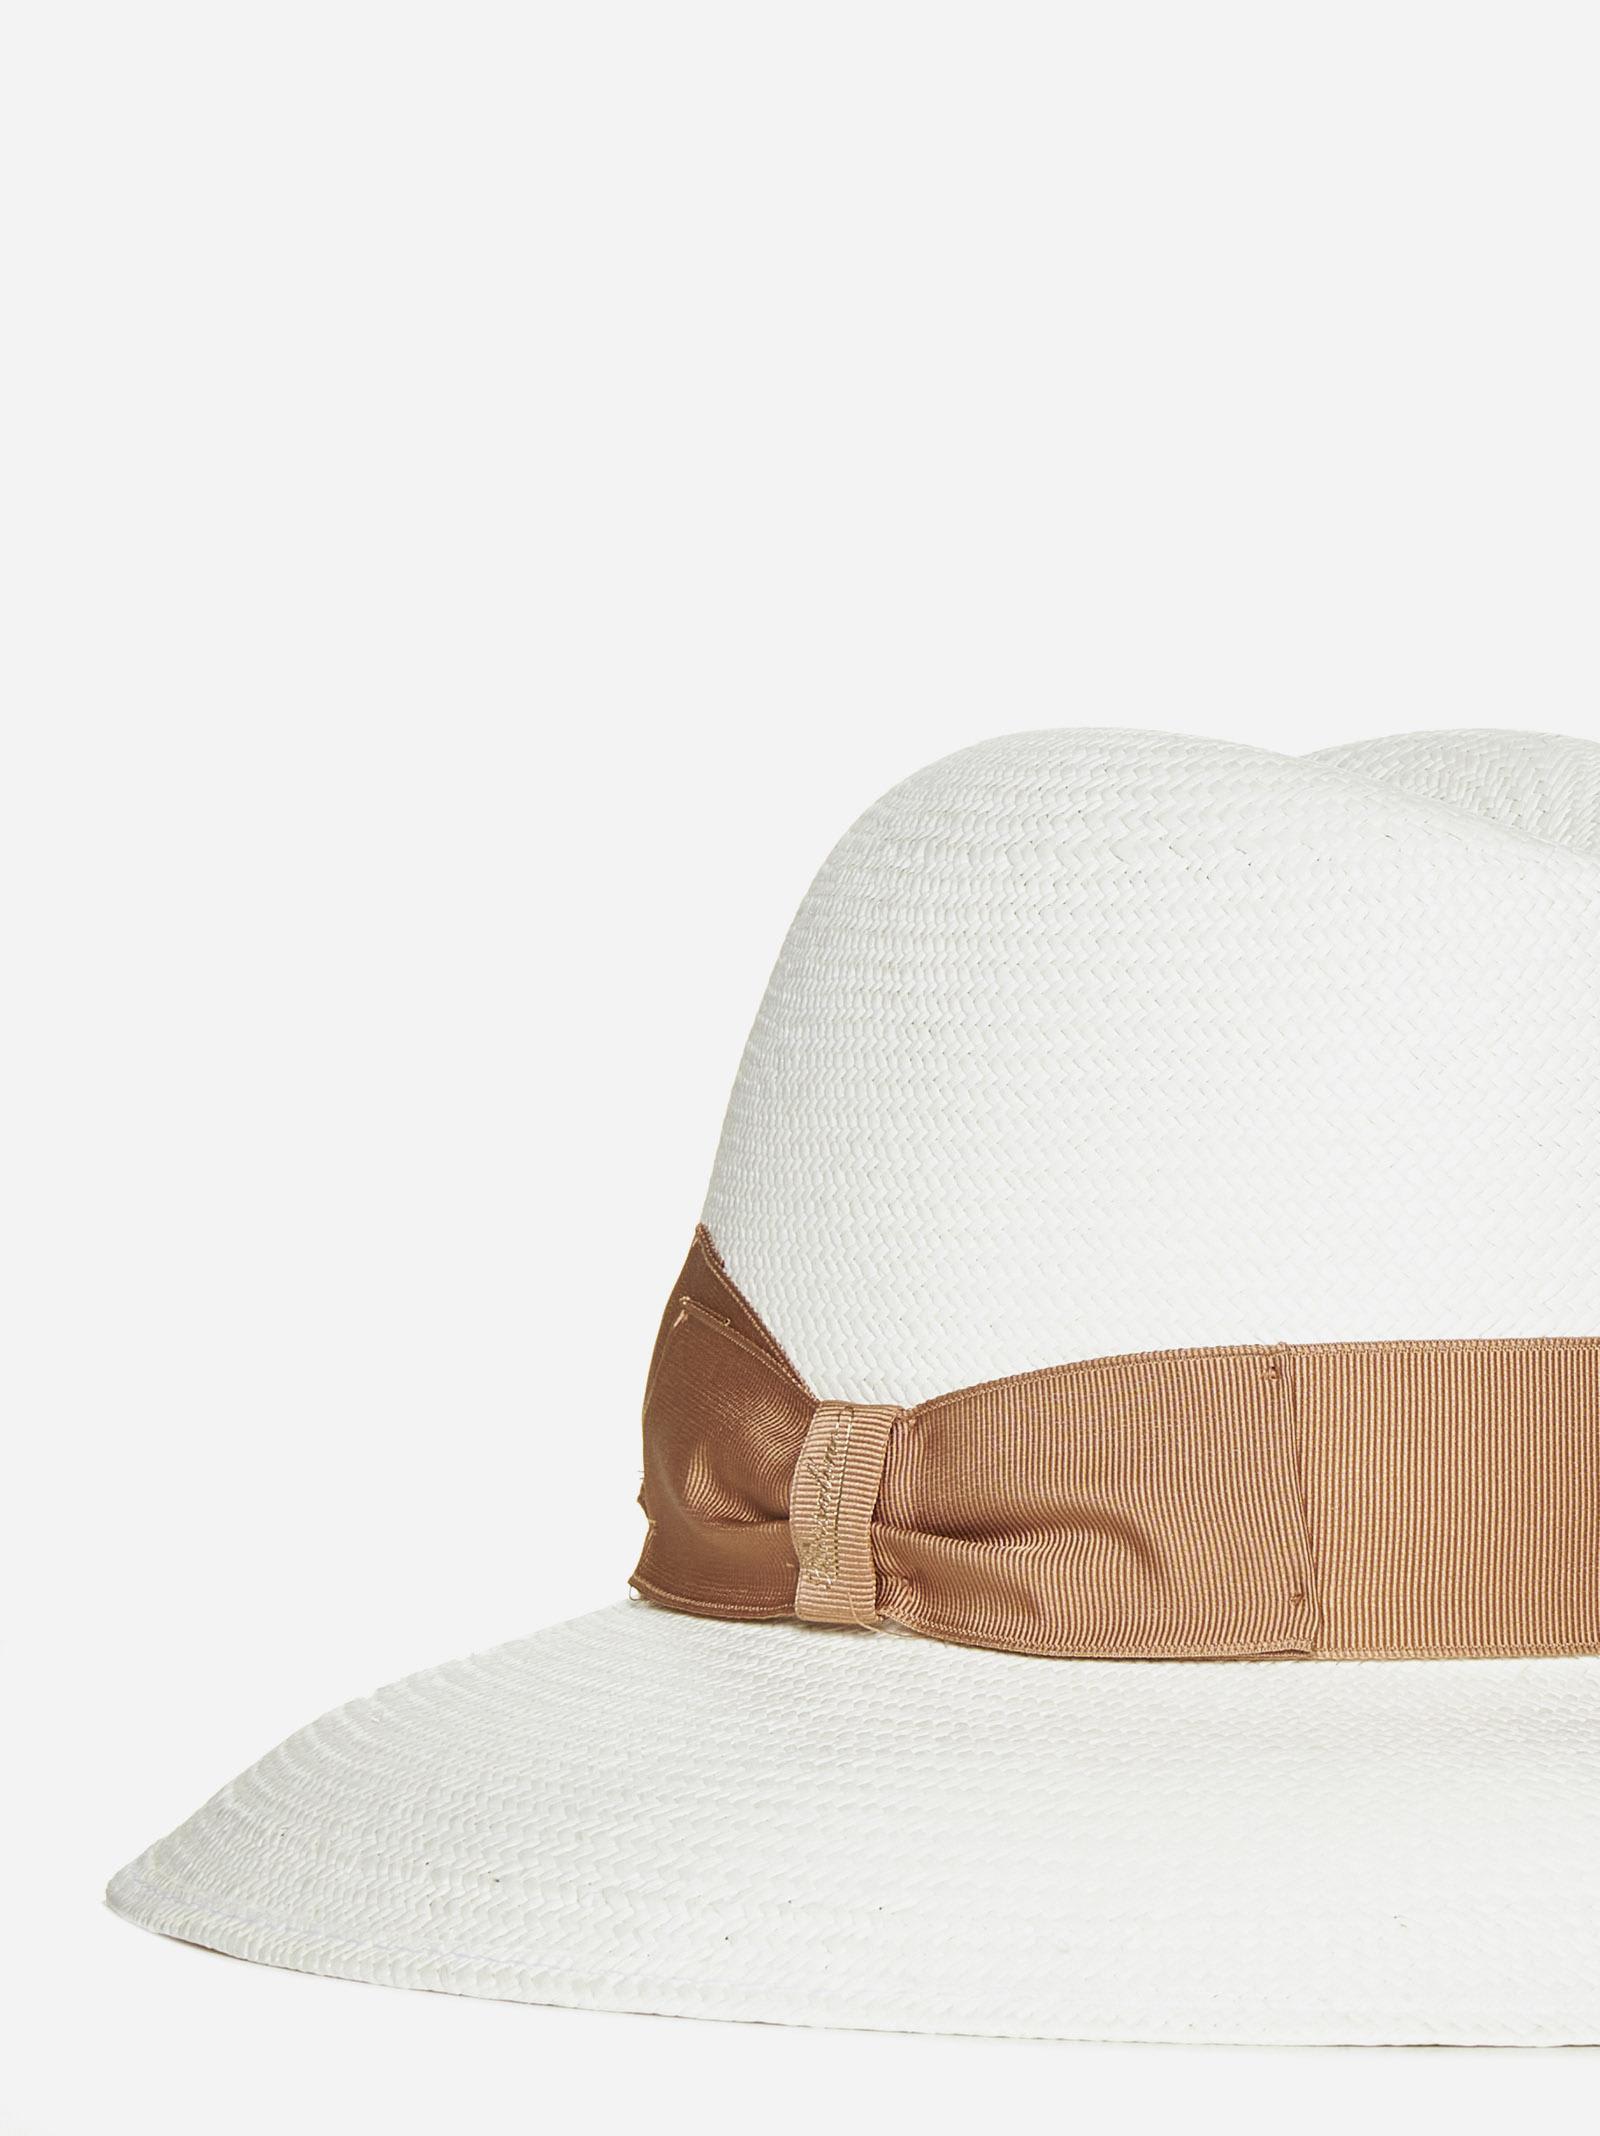 Shop Borsalino Caludette Large Brim Panama Hat In Panna Cammello